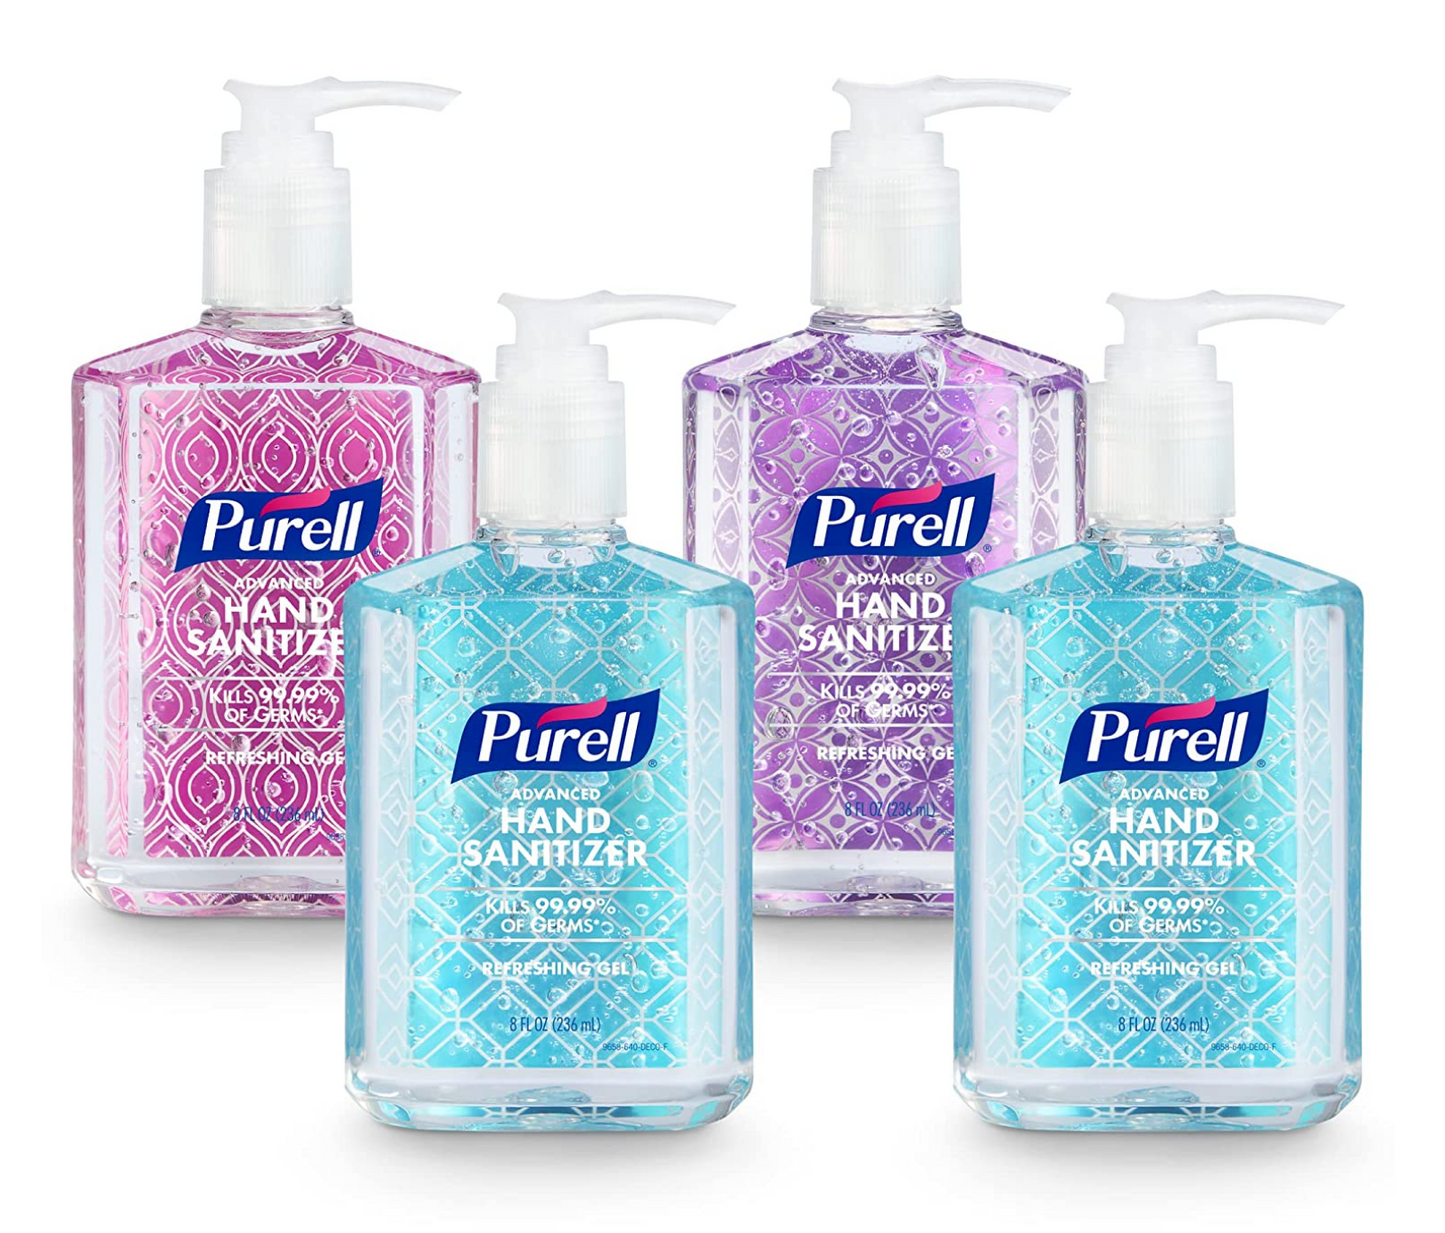 Purell Advanced Hand Sanitizer Decorative, 8 oz - $0.66 Each (Case of 48)